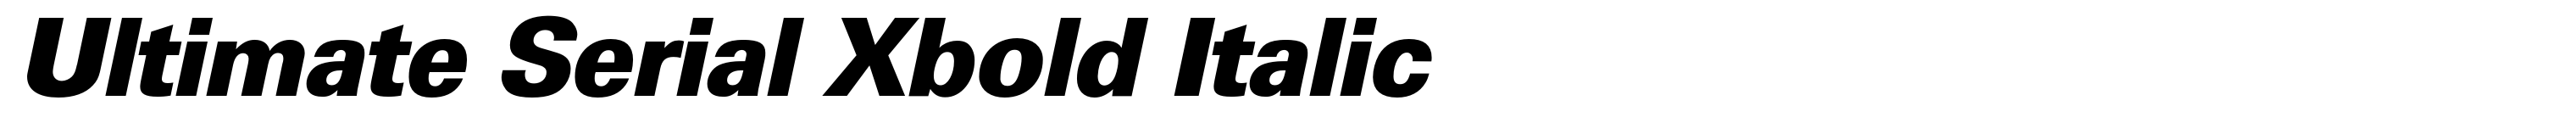 Ultimate Serial Xbold Italic